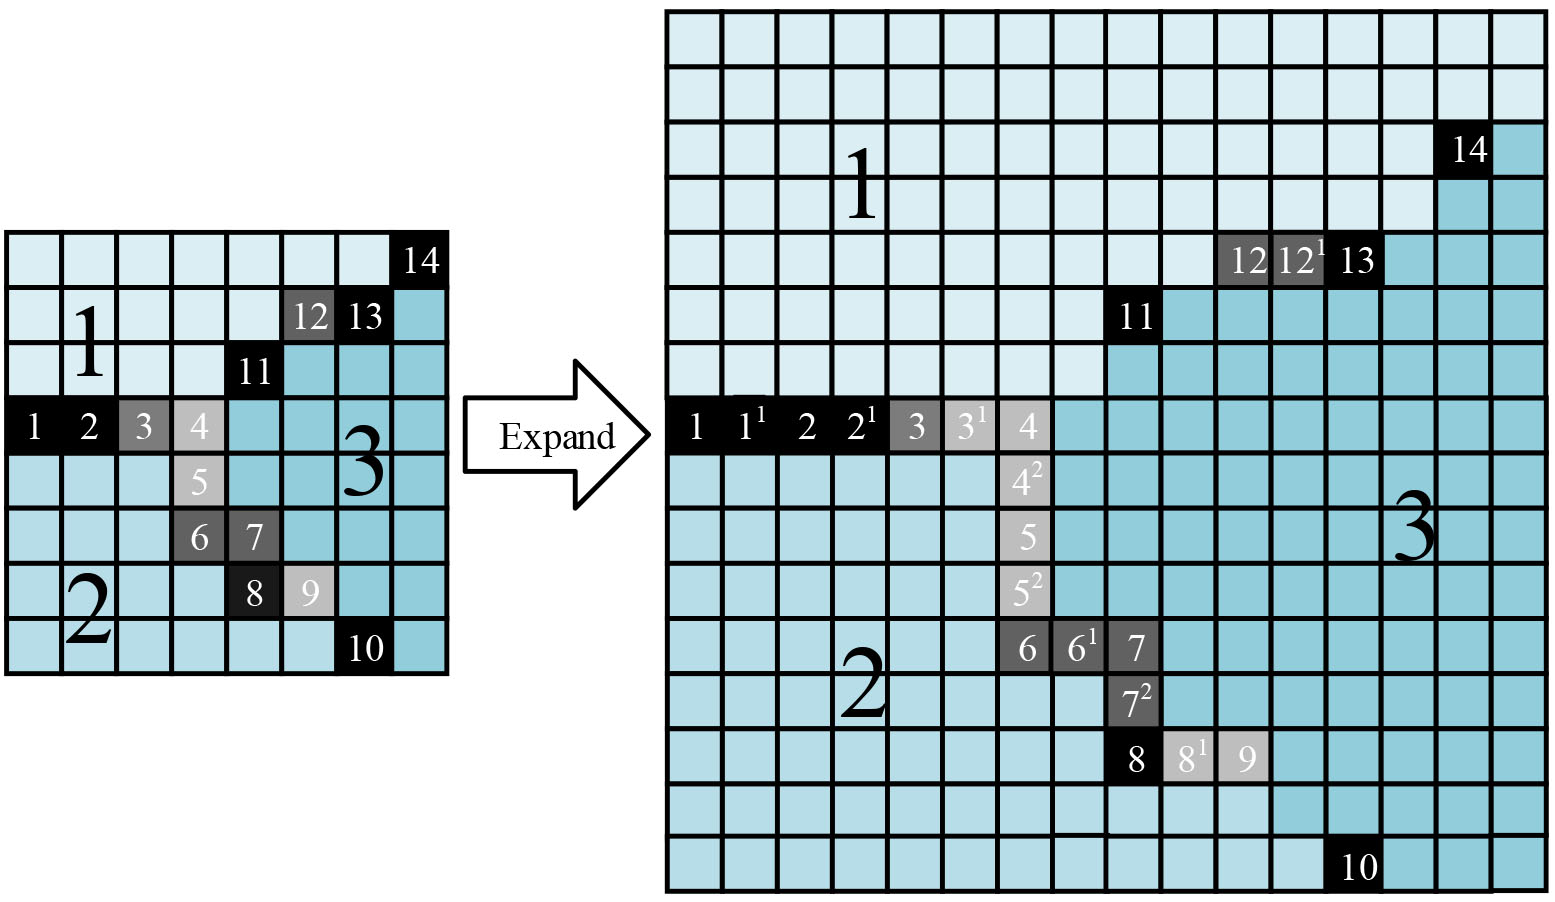 The extension of the initial segmentation energy matrix.